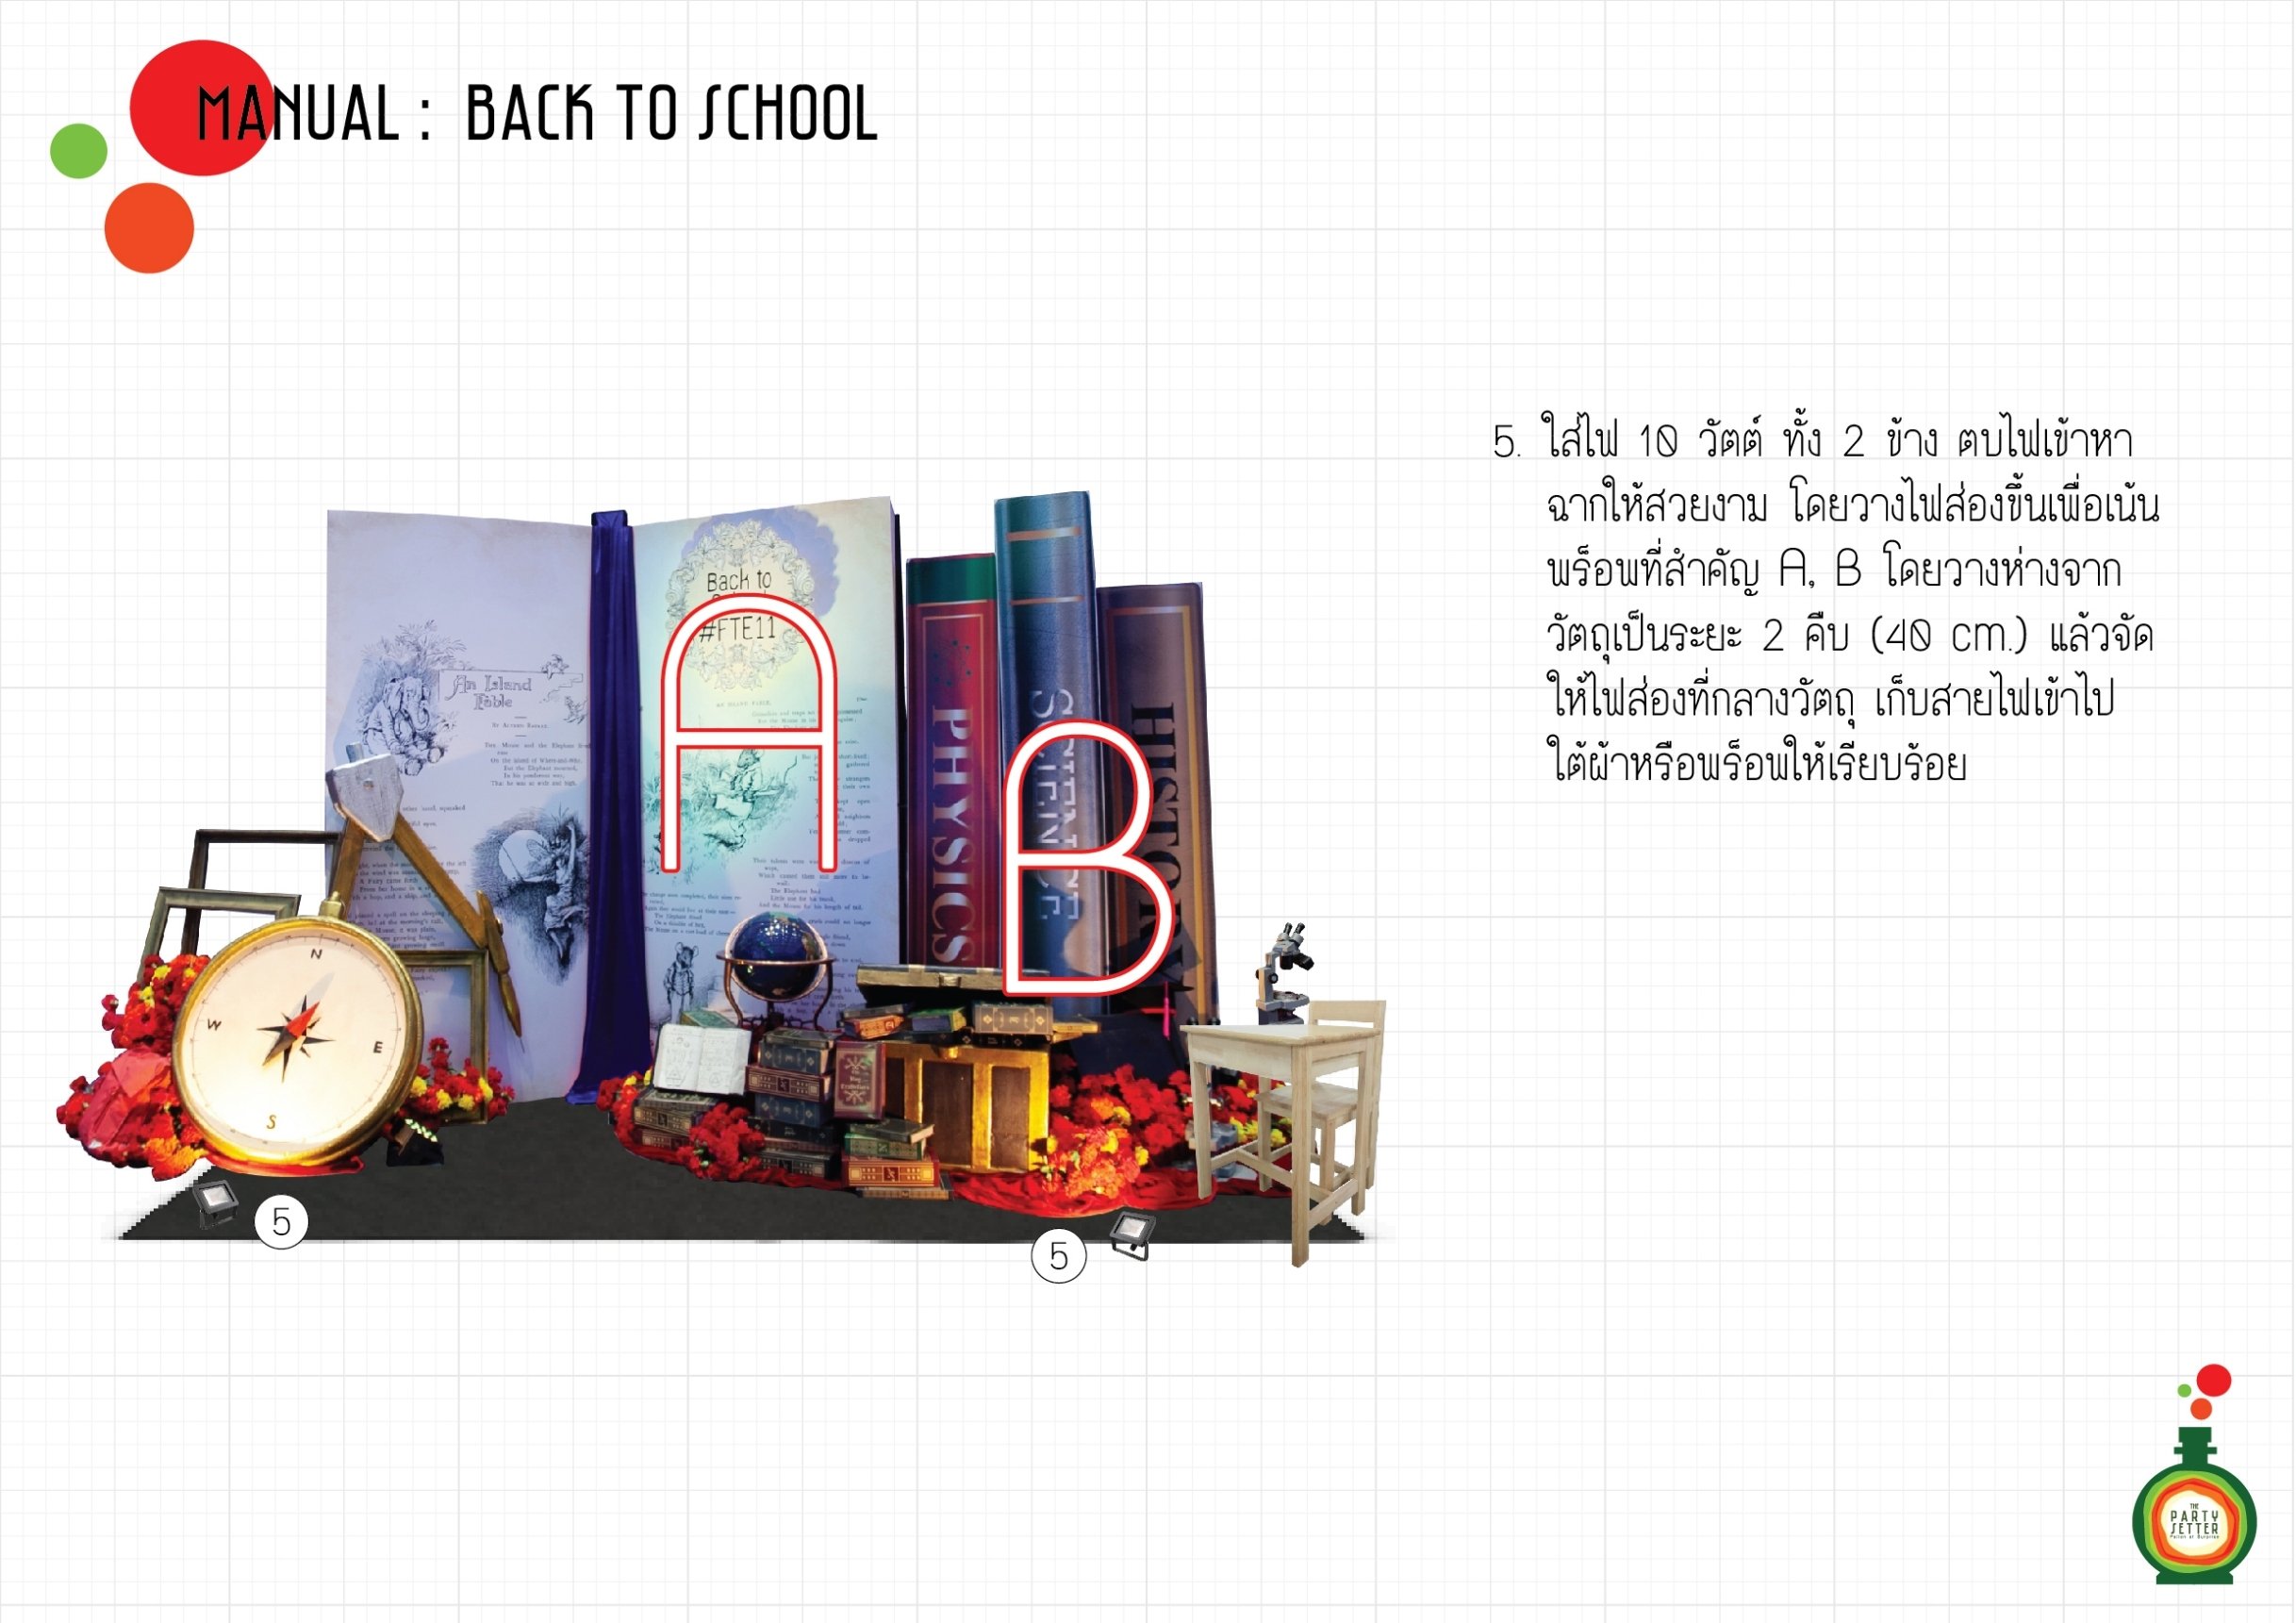 Manual_Back to School_05-01.jpg